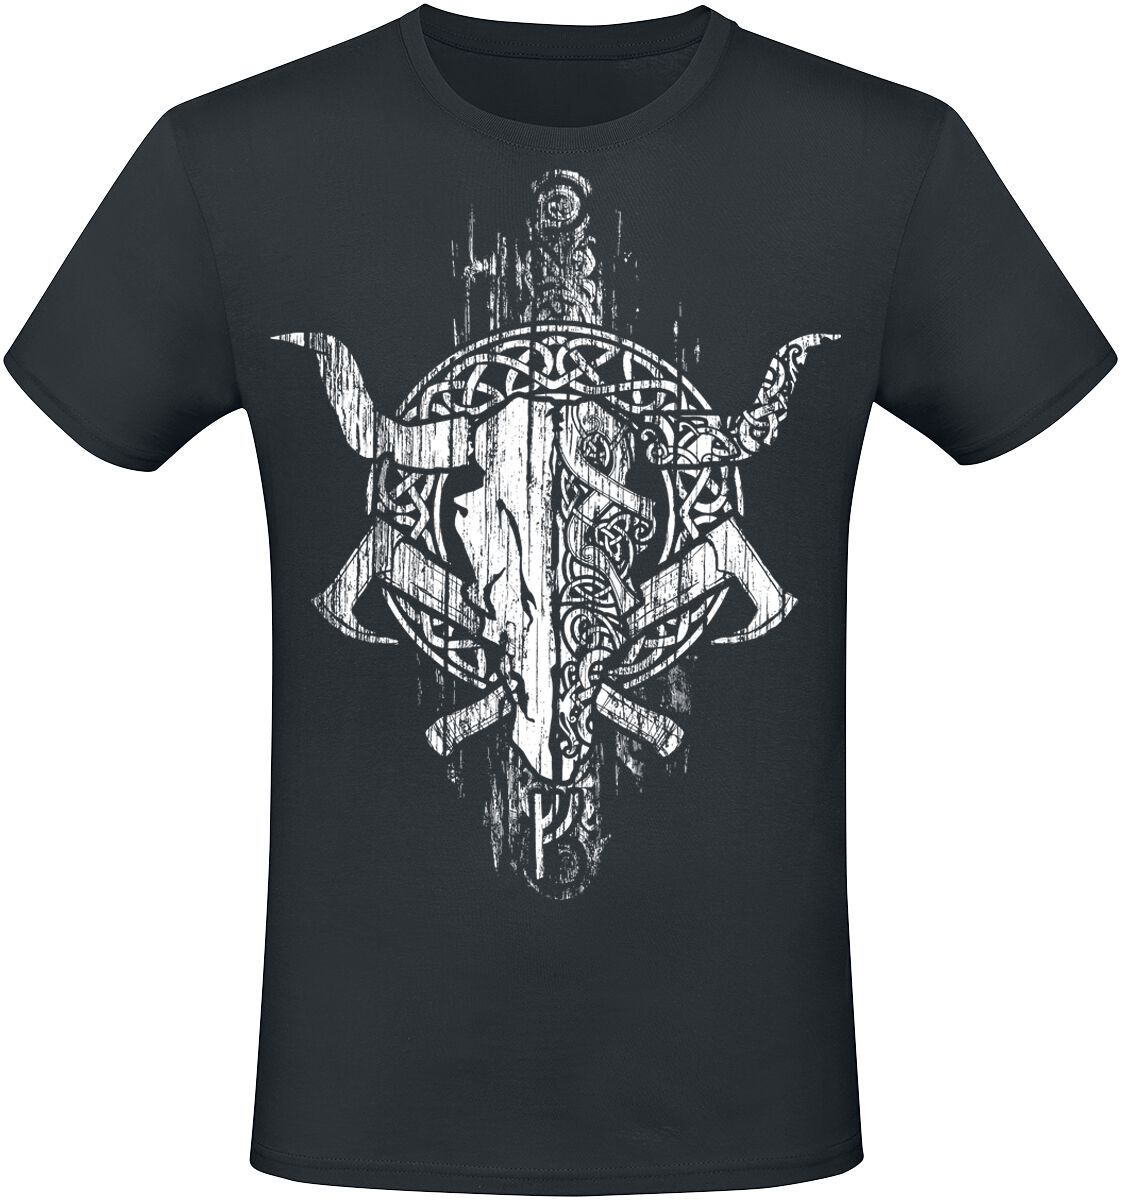 Wacken Open Air T-Shirt - W.O.A. - Wacken Awaits - S bis 5XL - für Männer - Größe 5XL - schwarz  - EMP exklusives Merchandise!